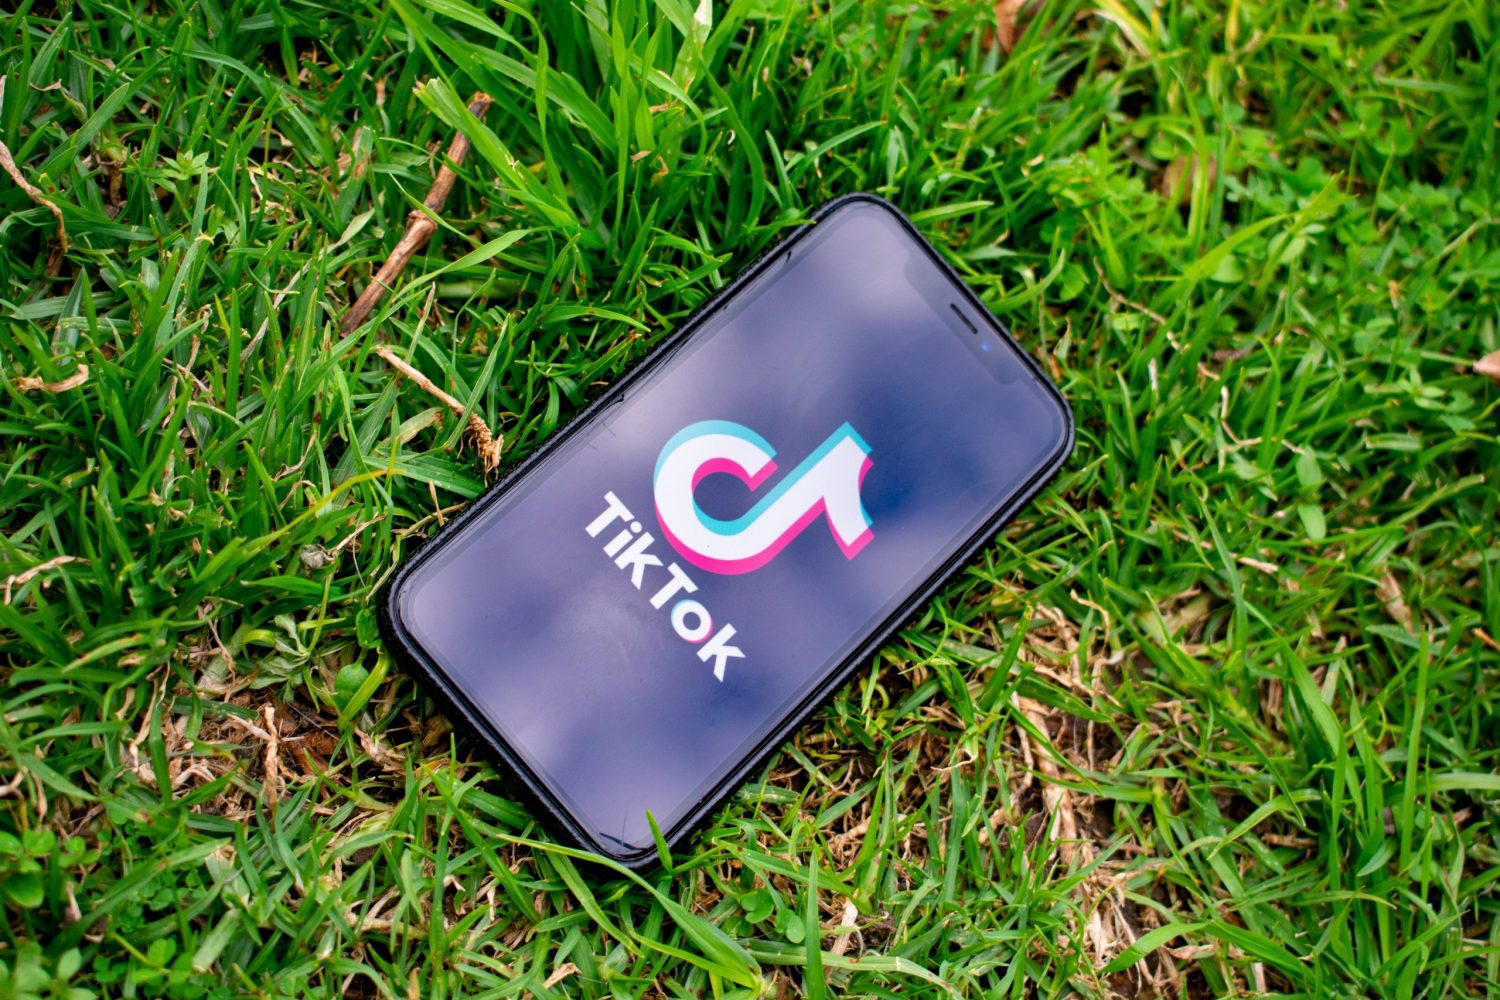 iPhone displaying the TikTok app